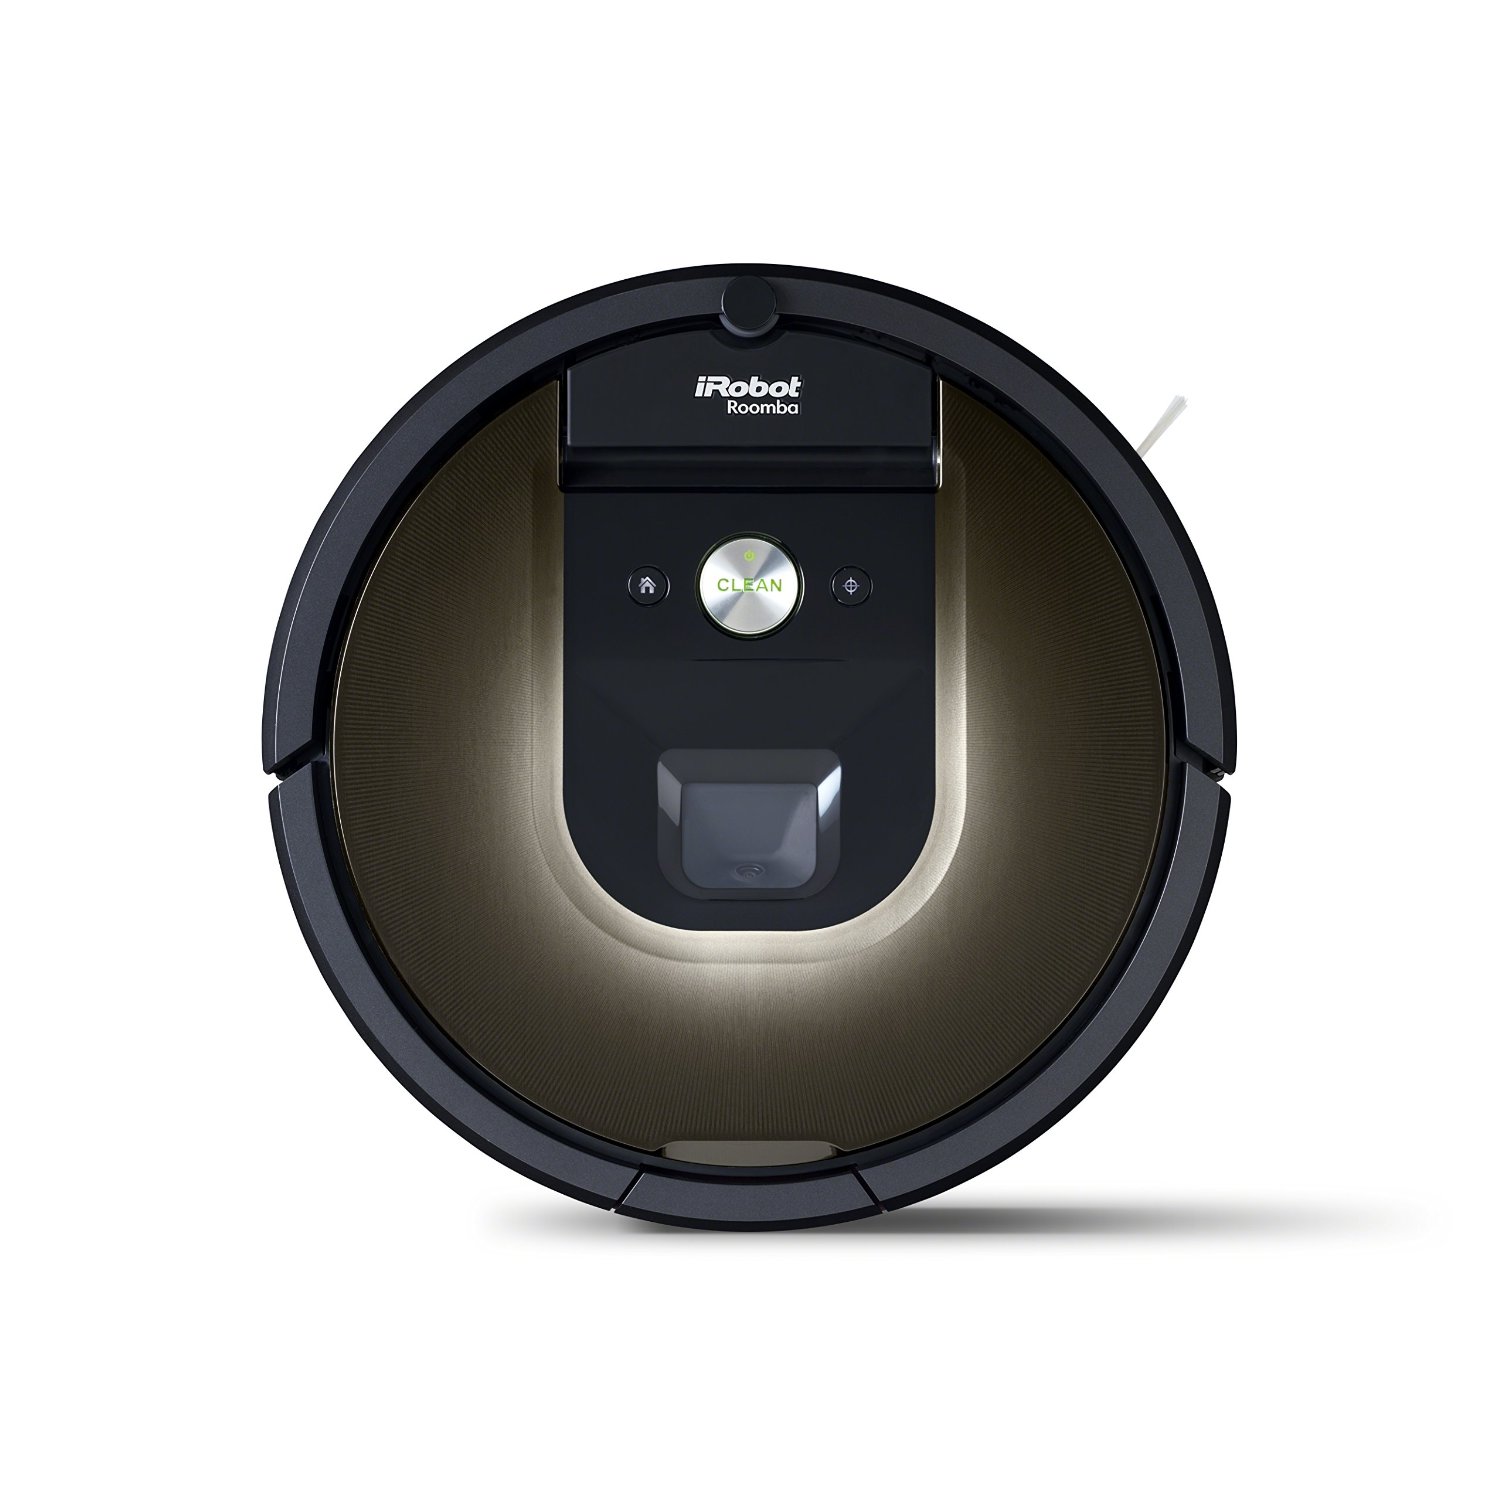 <br/><br/>  ㊣胡蜂正品㊣ iRobot Roomba 980 Vacuum Cleaning Robot 自動 吸塵器 掃地機器人<br/><br/>